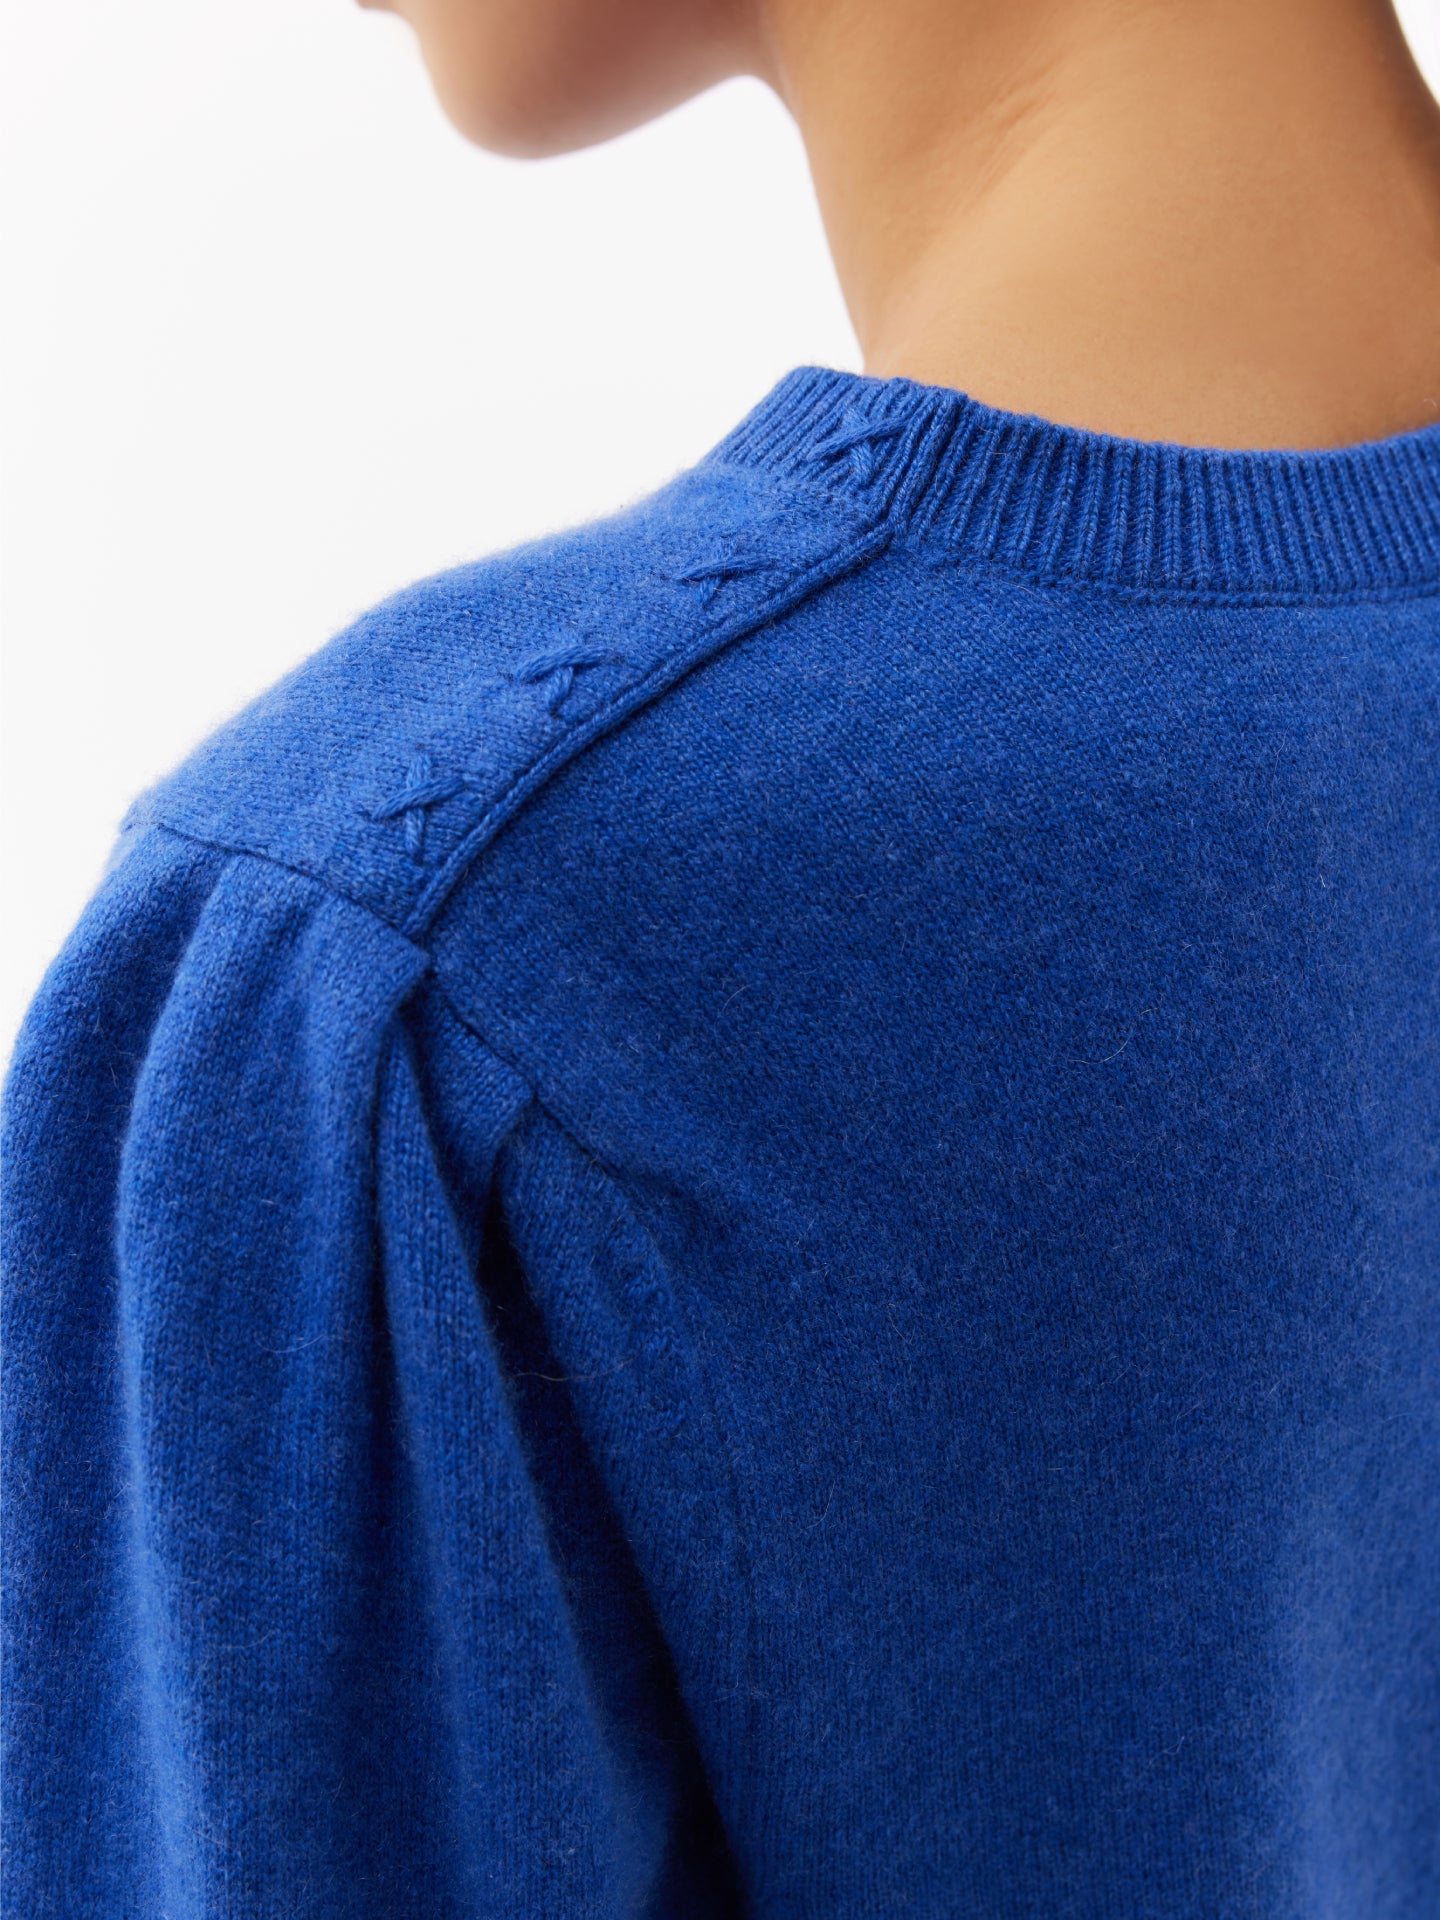 Women's Cashmere Puff Sleeve Top Strong Blue - Gobi Cashmere